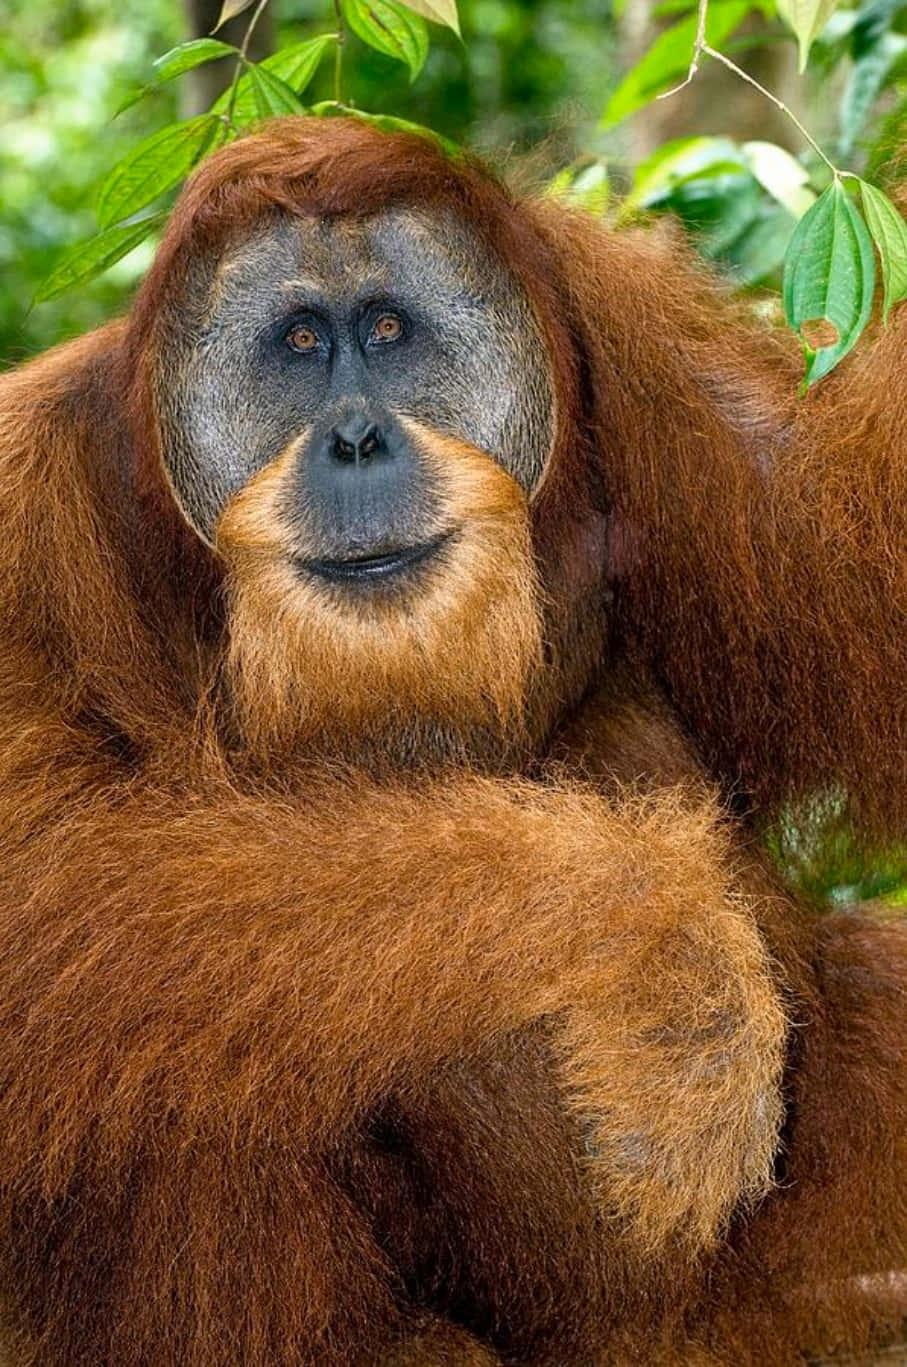 An Orangutan plays in the trees of its lush jungle habitat